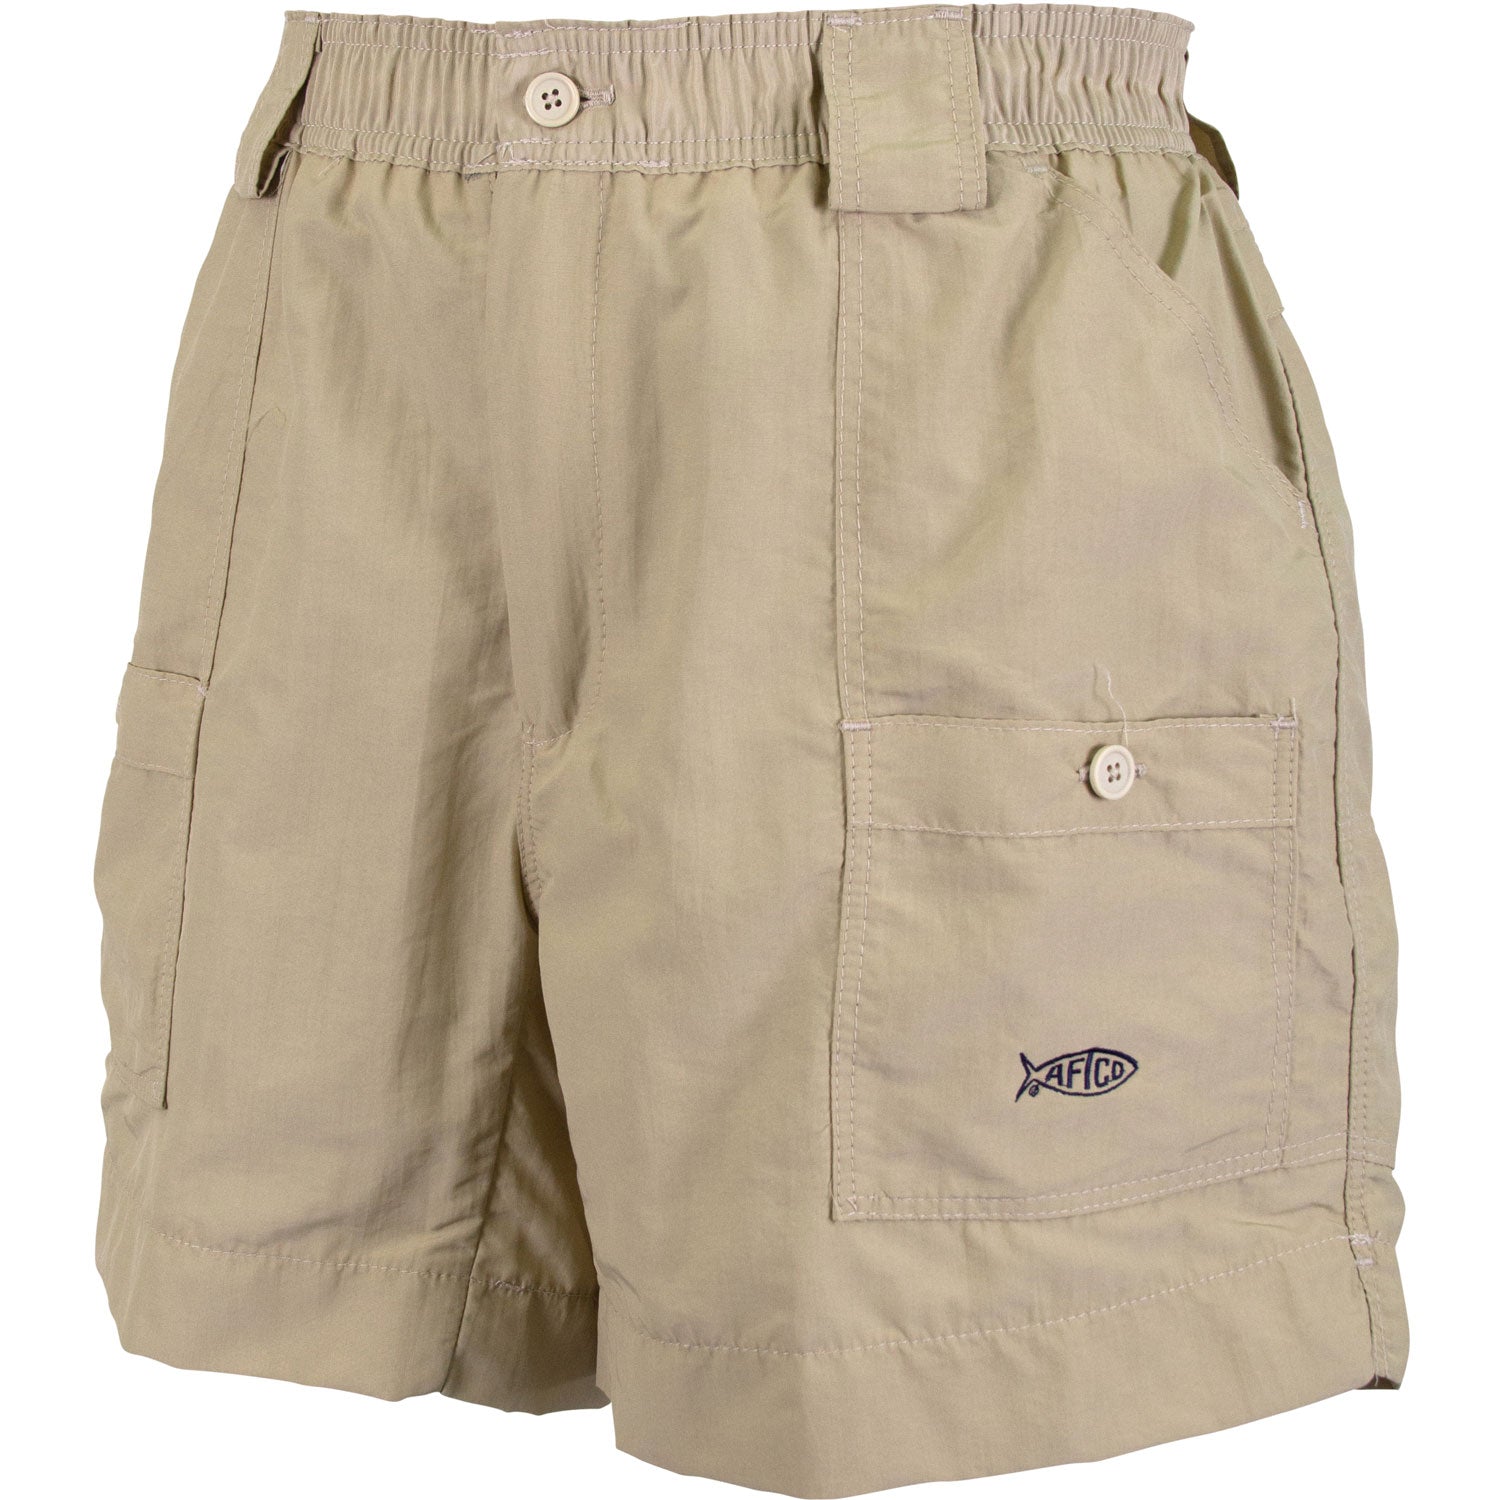 AFTCO Men's Original Fishing Shorts, 30 / Khaki